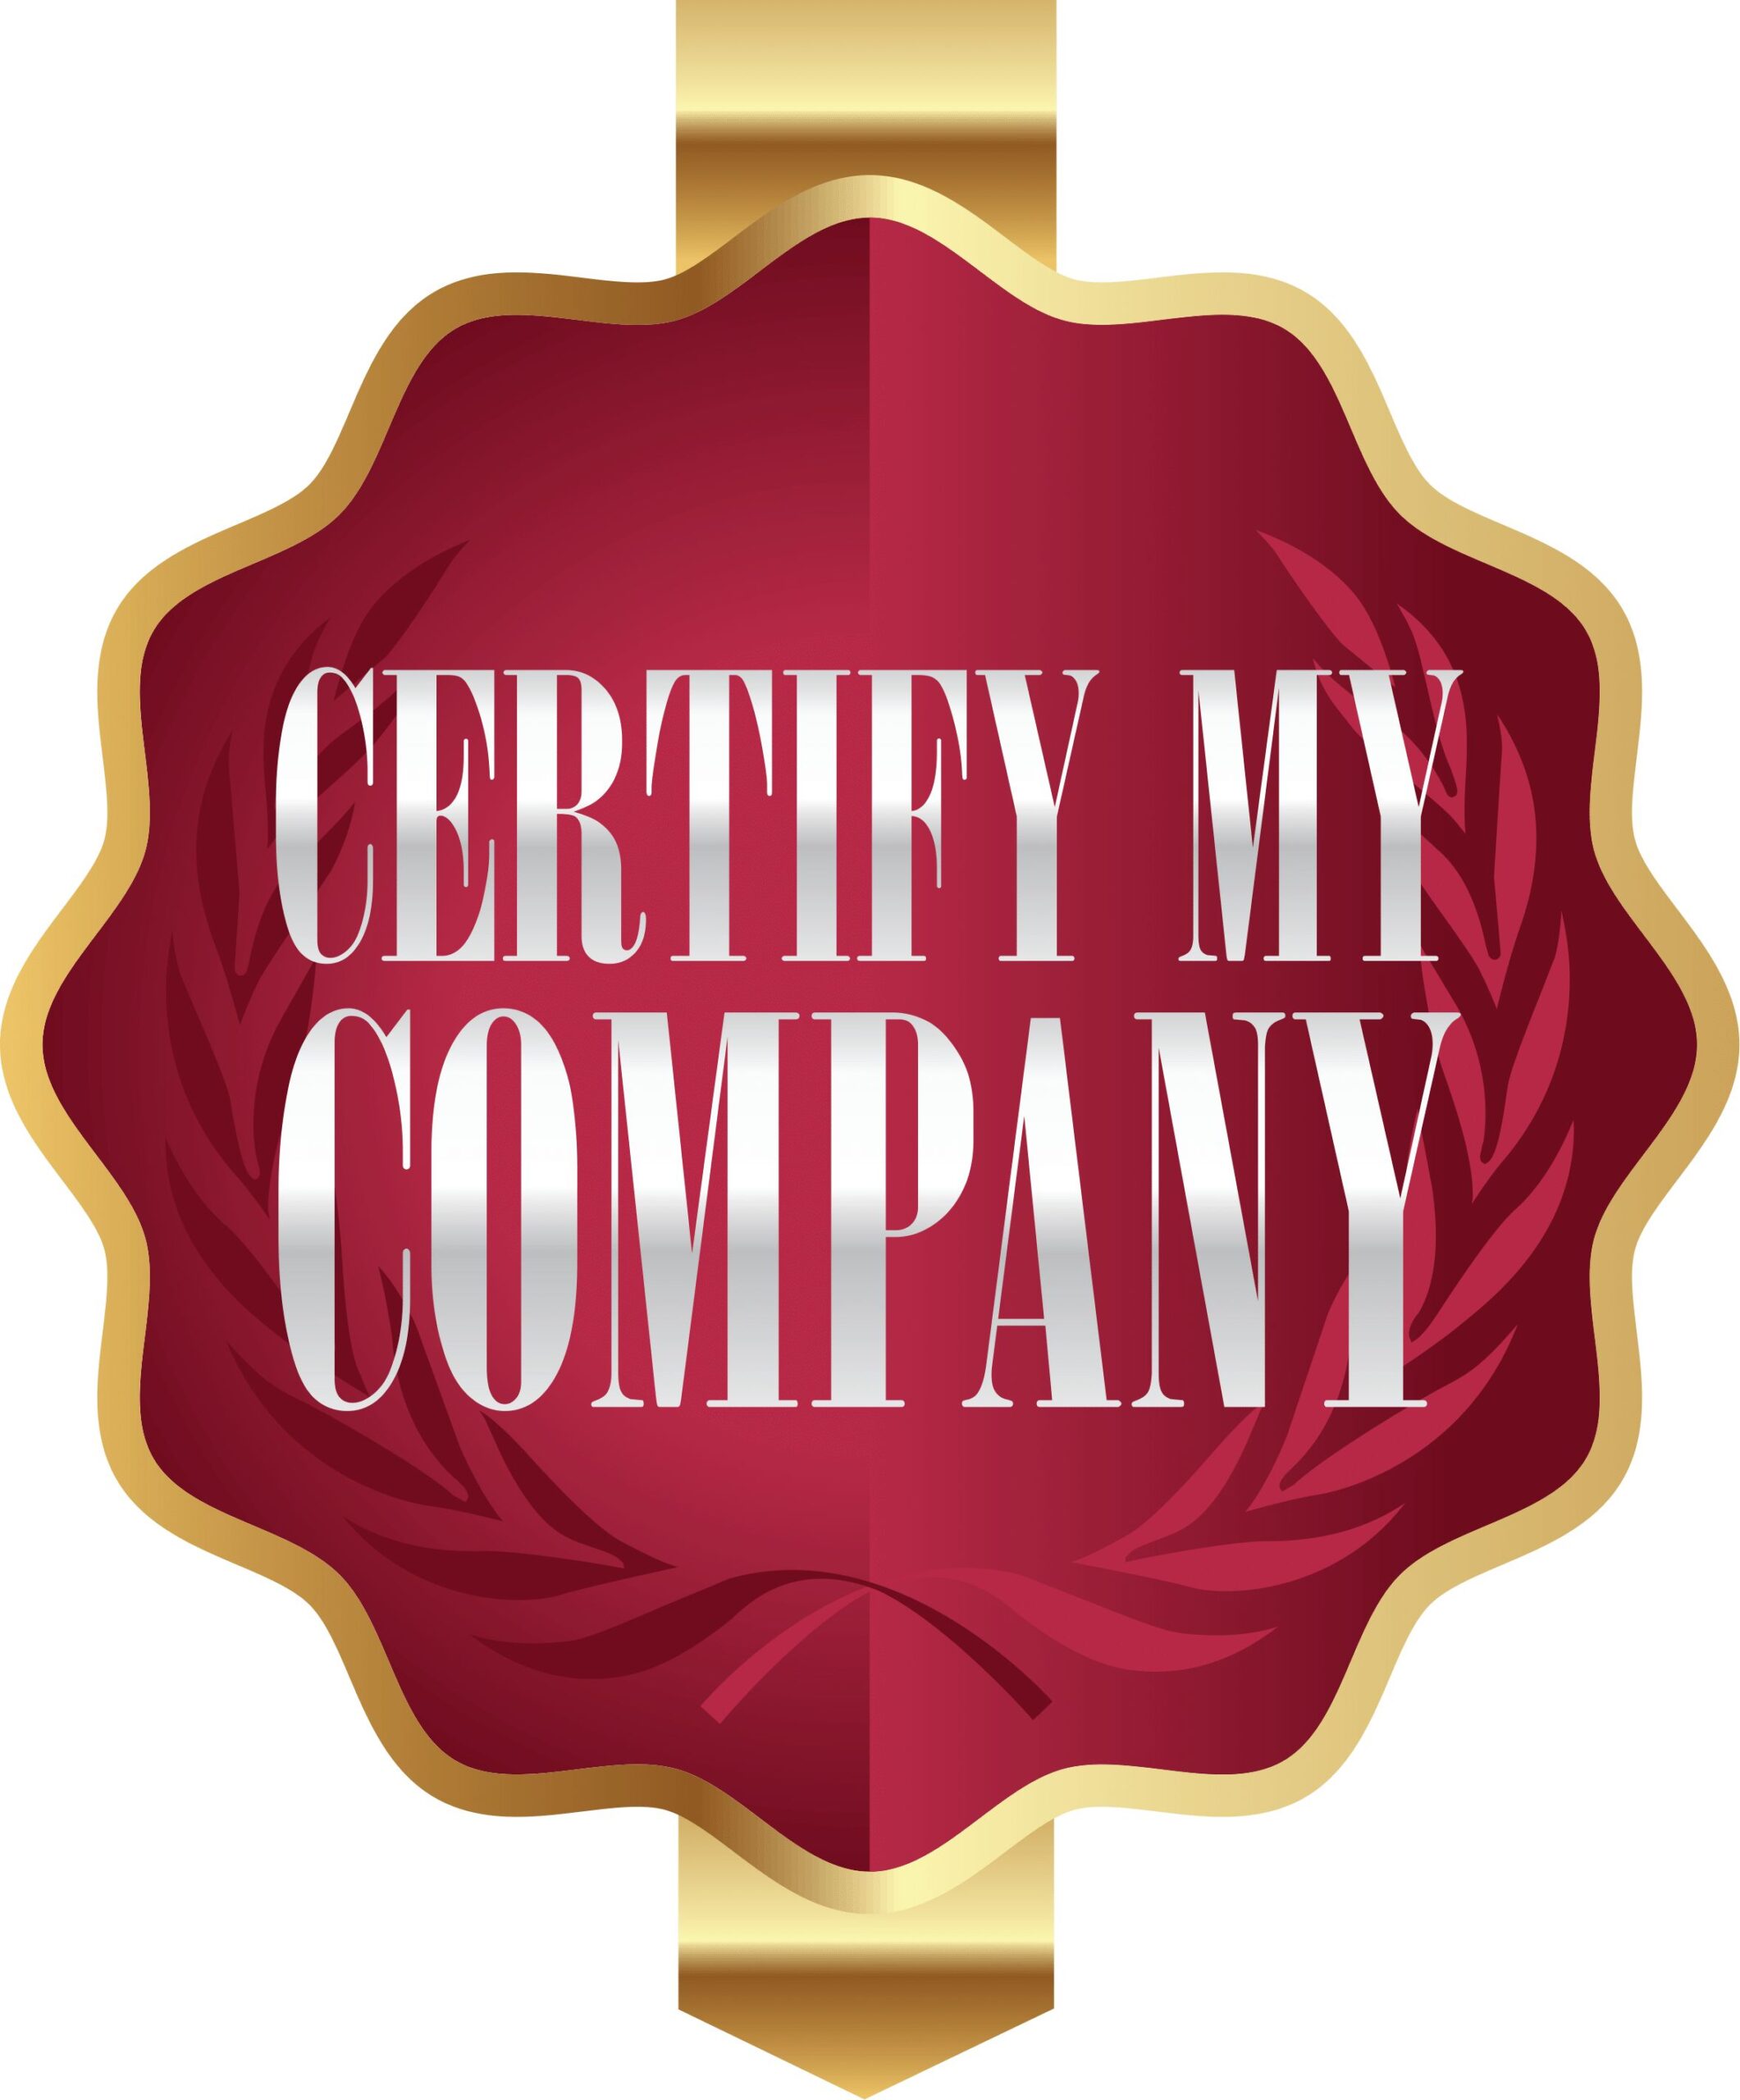 Certify My Company